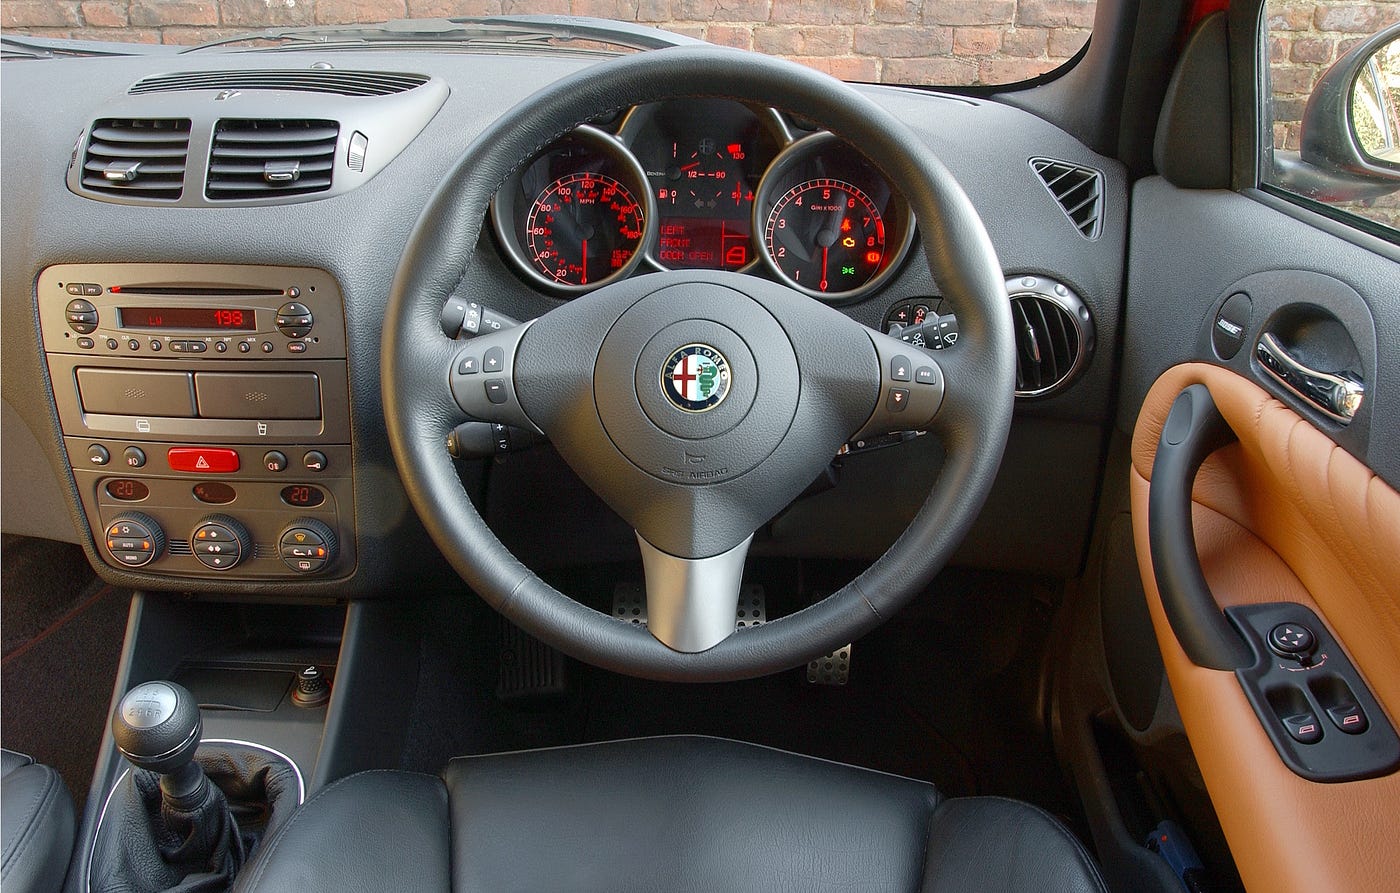 Alfa Roméo 147 GTA - Driving Experience